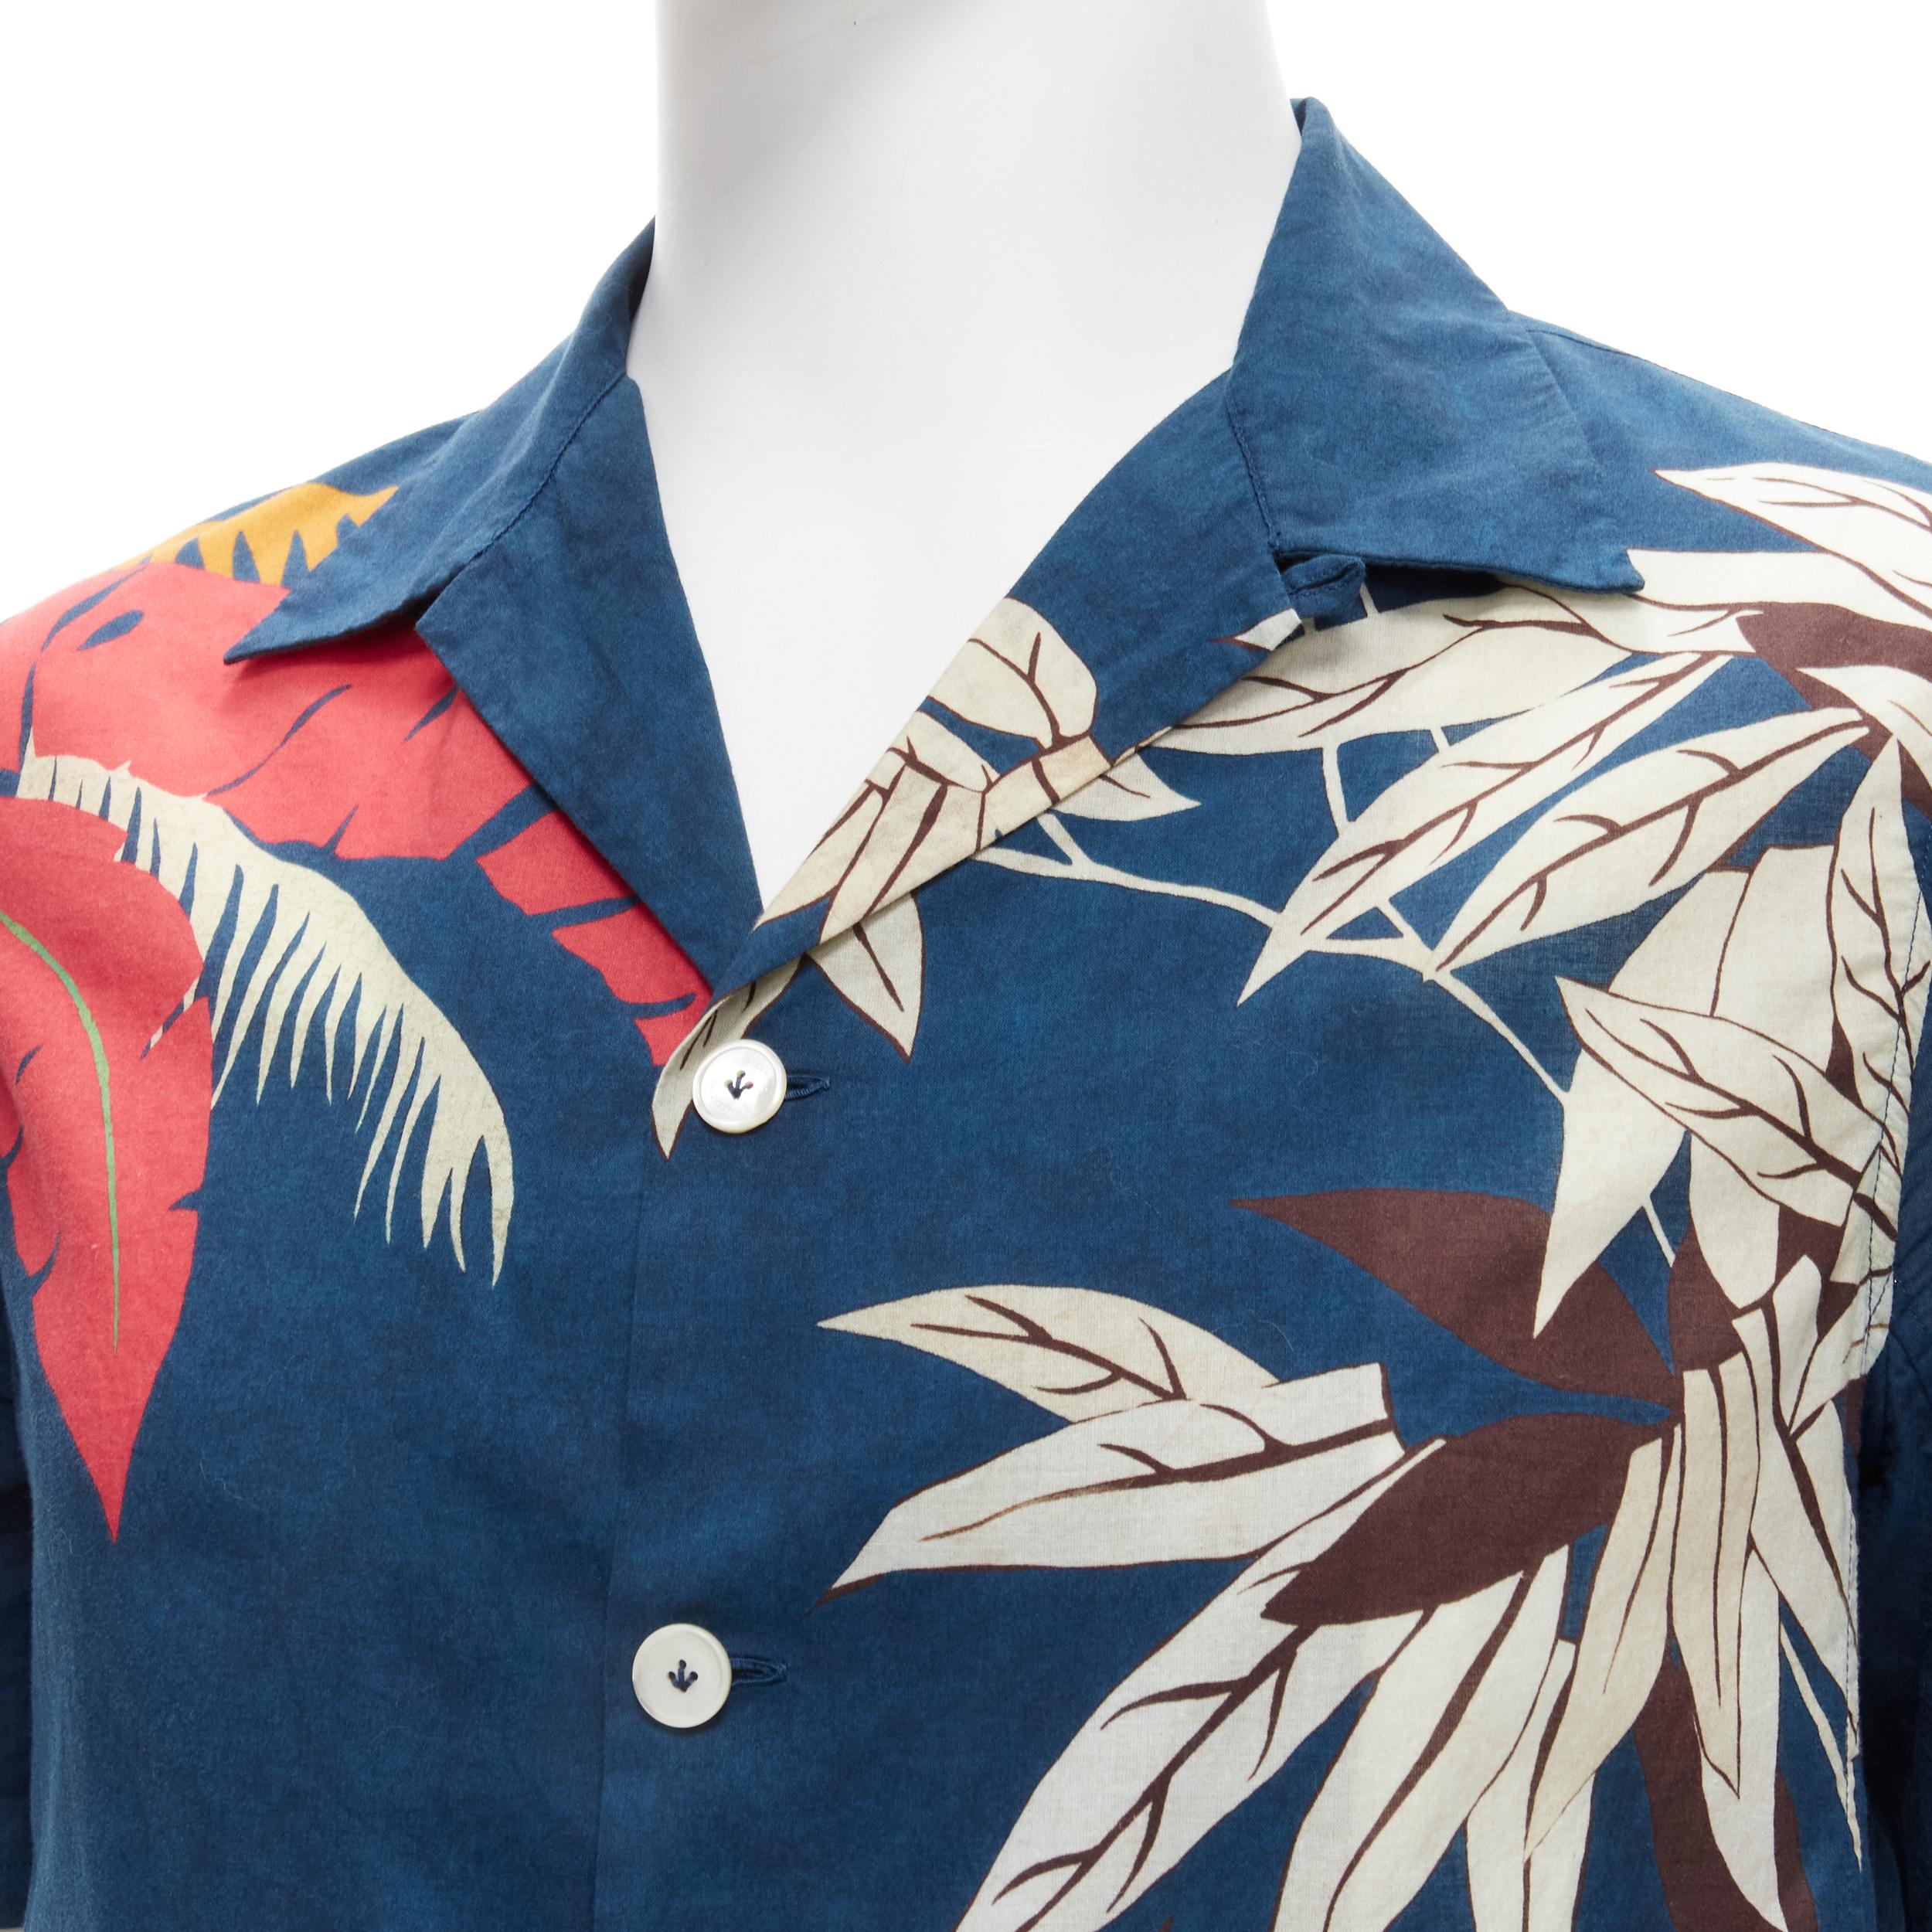 VALENTINO 100% cotton blue Hawaiian floral print button down shirt EU37 XS

Reference: CRTI/A00755

Brand: Valentino

Designer: Pier Paolo Piccioli

Material: Cotton

Color: Navy, Multicolour

Pattern: Photographic Print

Closure: Button

Made in: